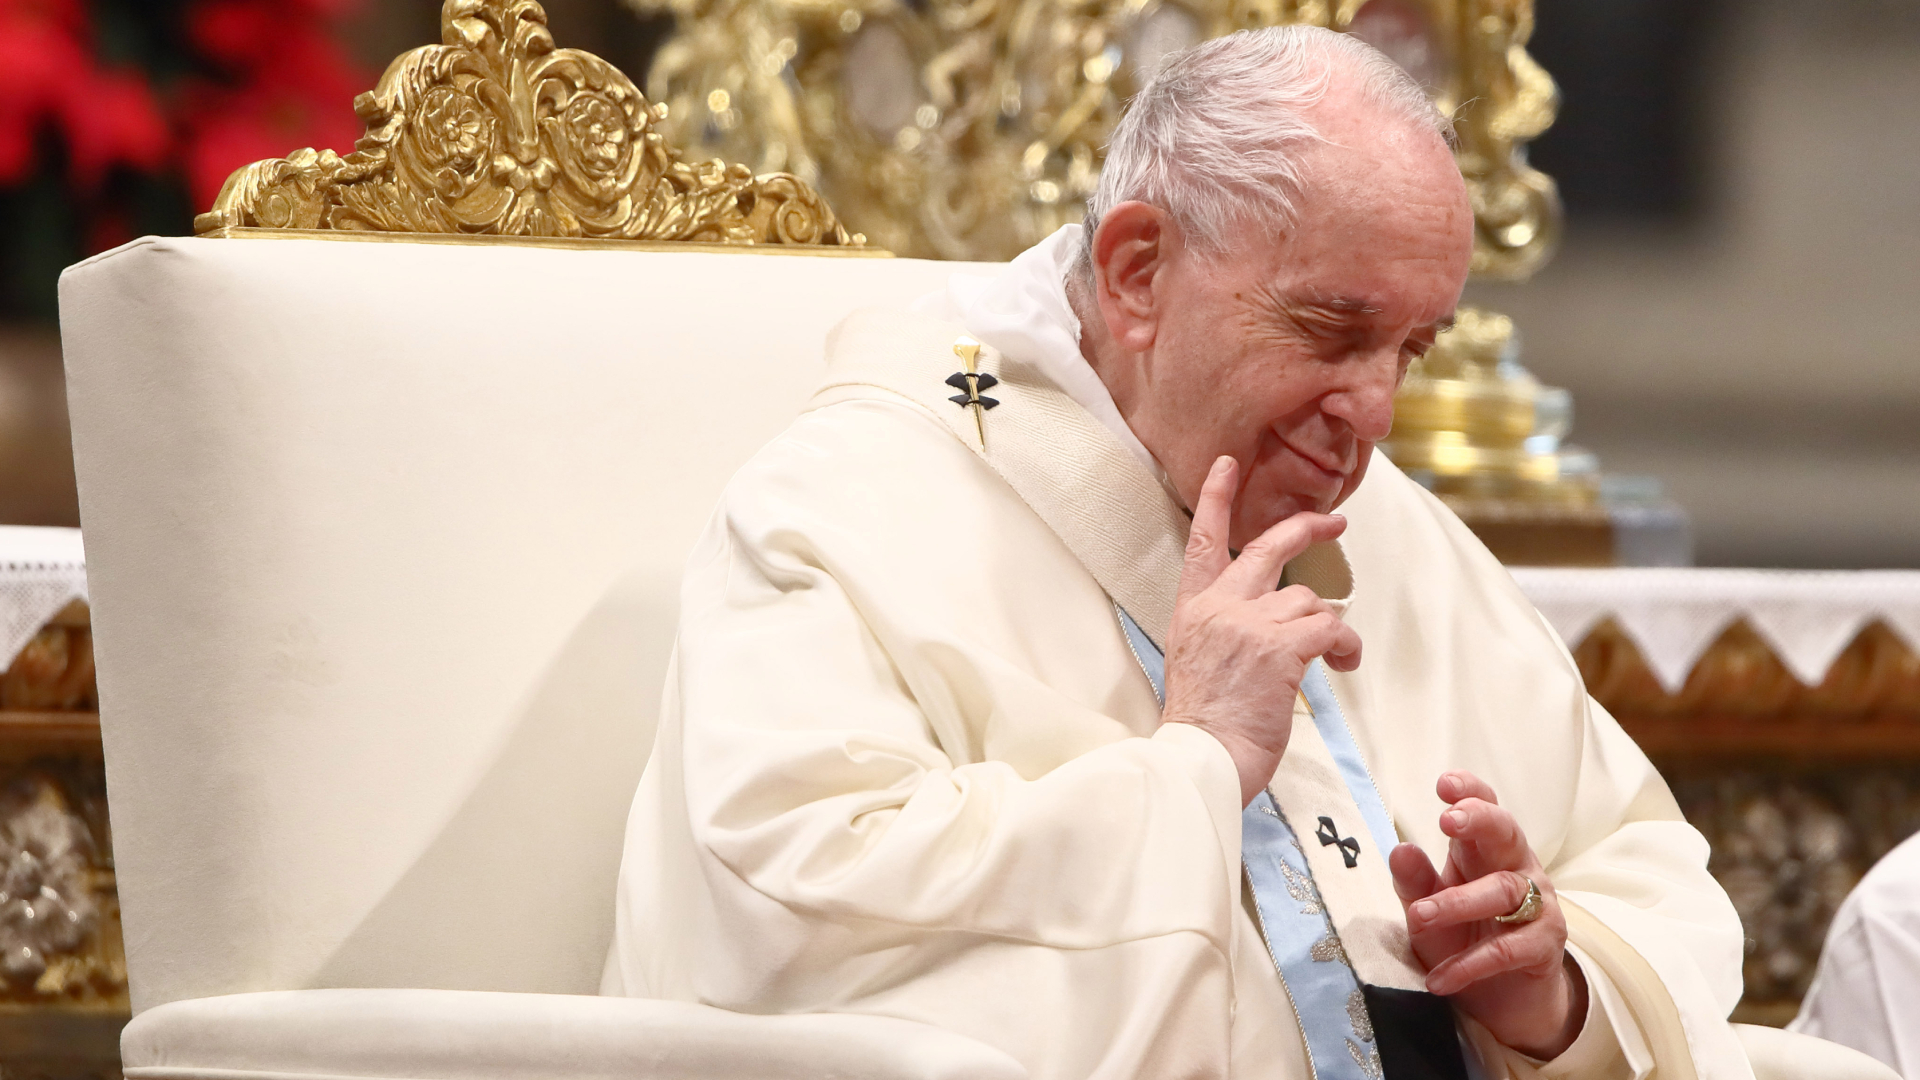 Eller yukarı sandalyede oturan Papa Francis